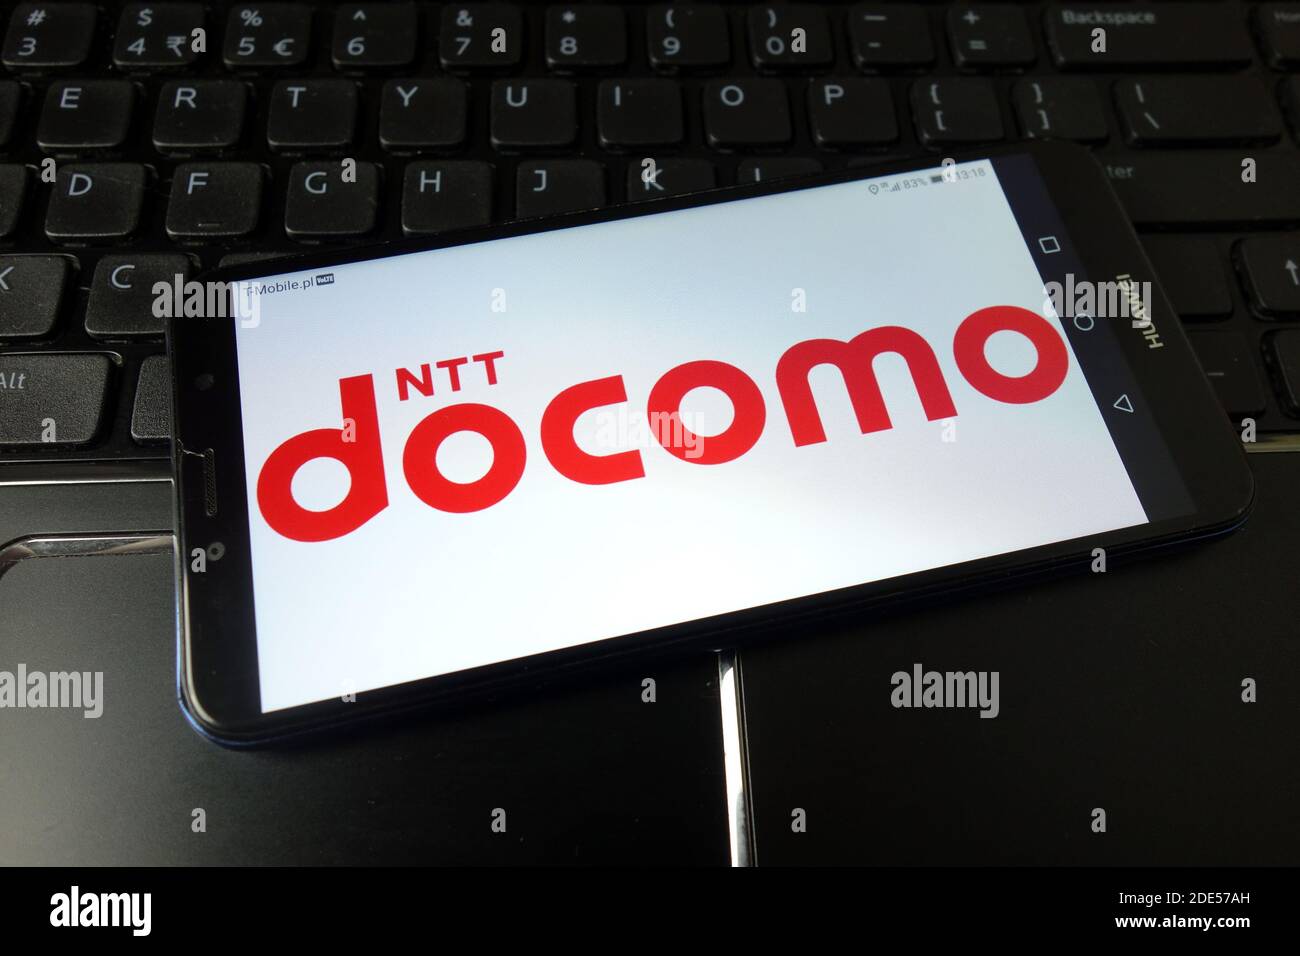 KONSKIE, POLAND - January 11, 2020: Ntt Docomo Inc company logo displayed on mobile phone Stock Photo